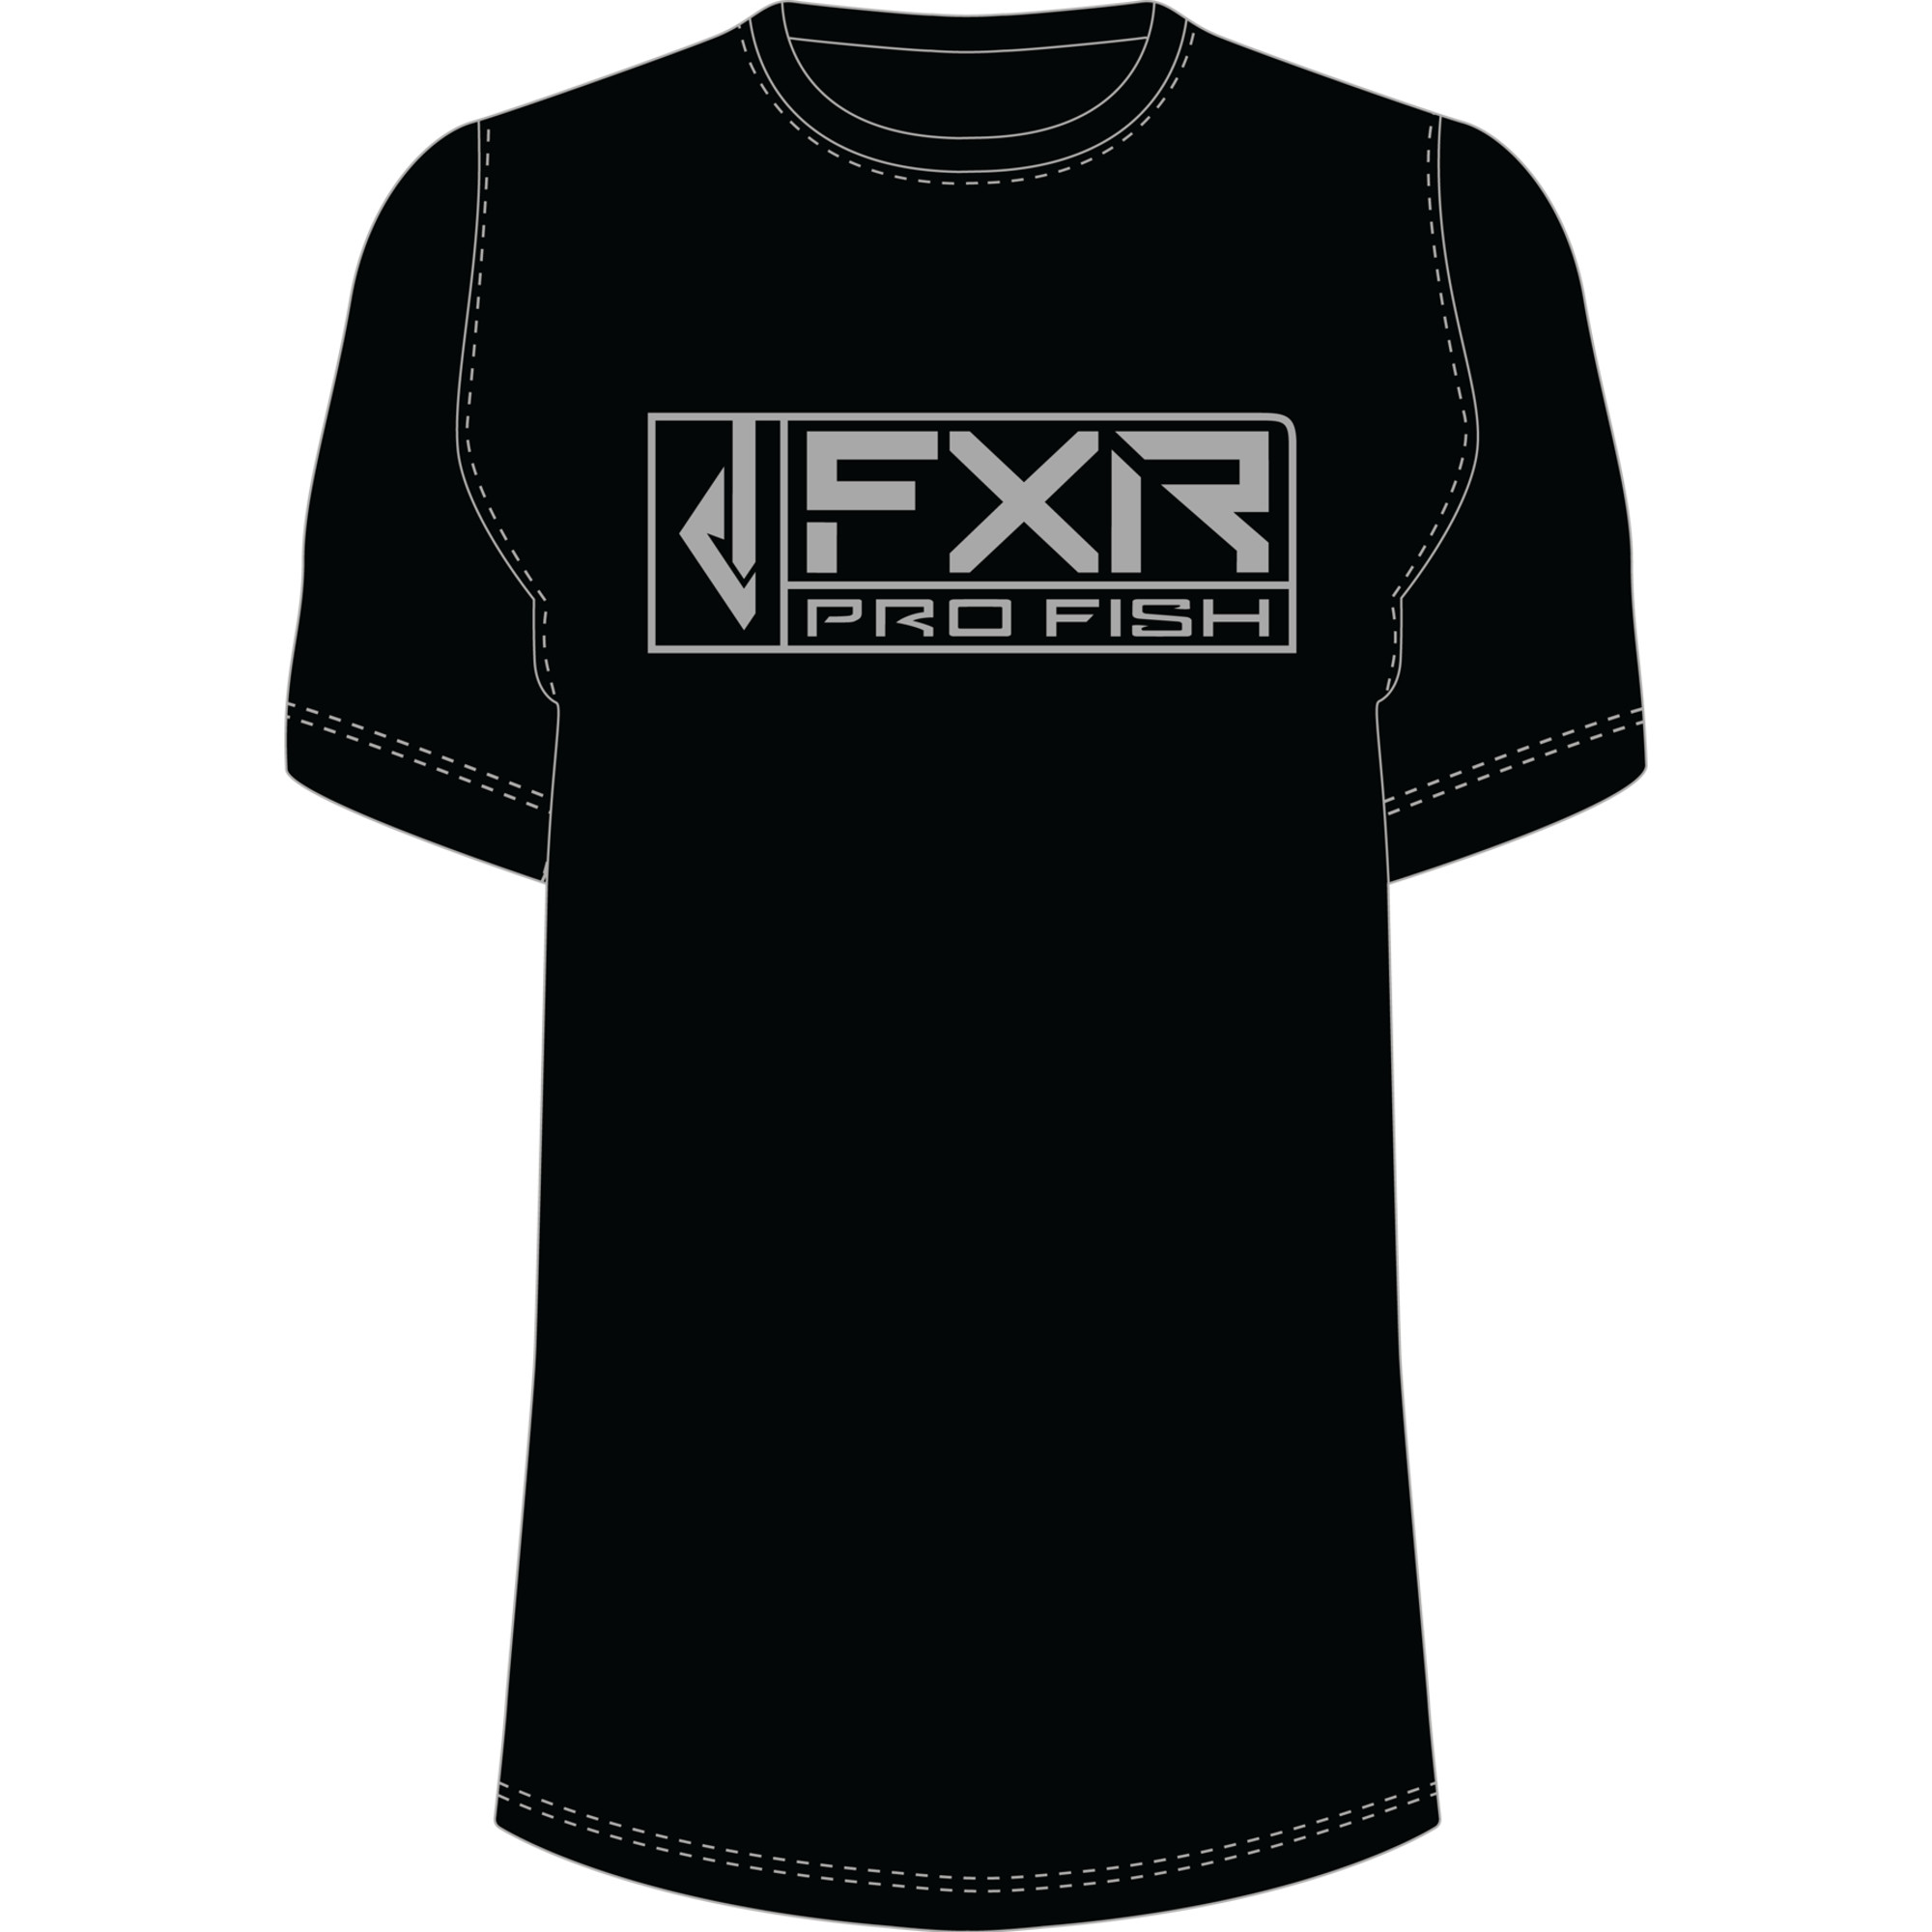 fxr racing t-shirt shirts for men excursion tech